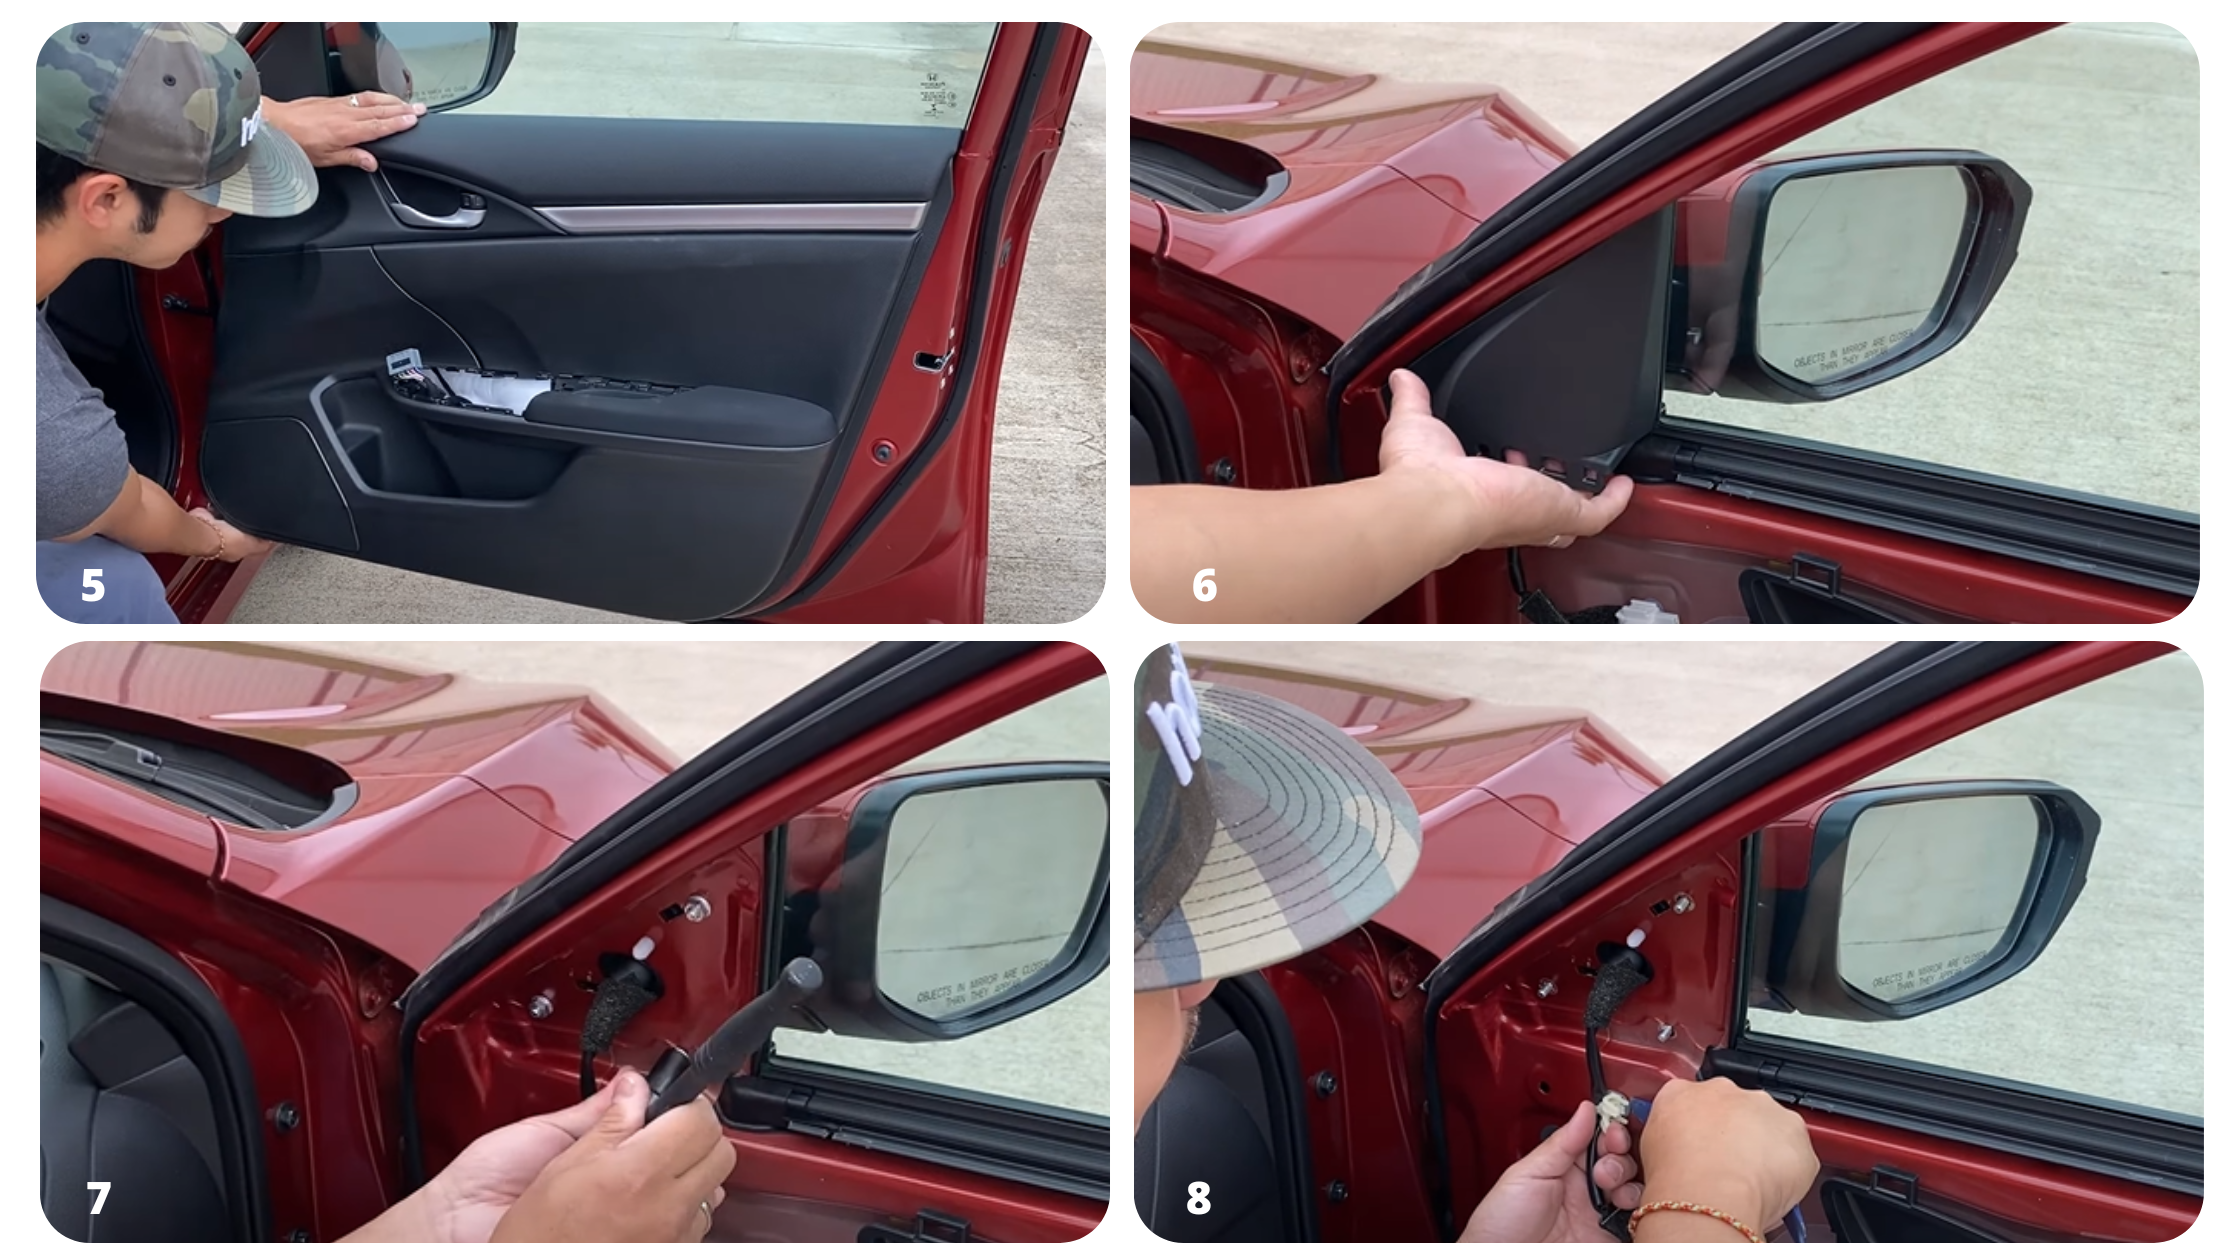 Replacing a 2016-2021 Honda Civic Side View Mirror steps 5-8